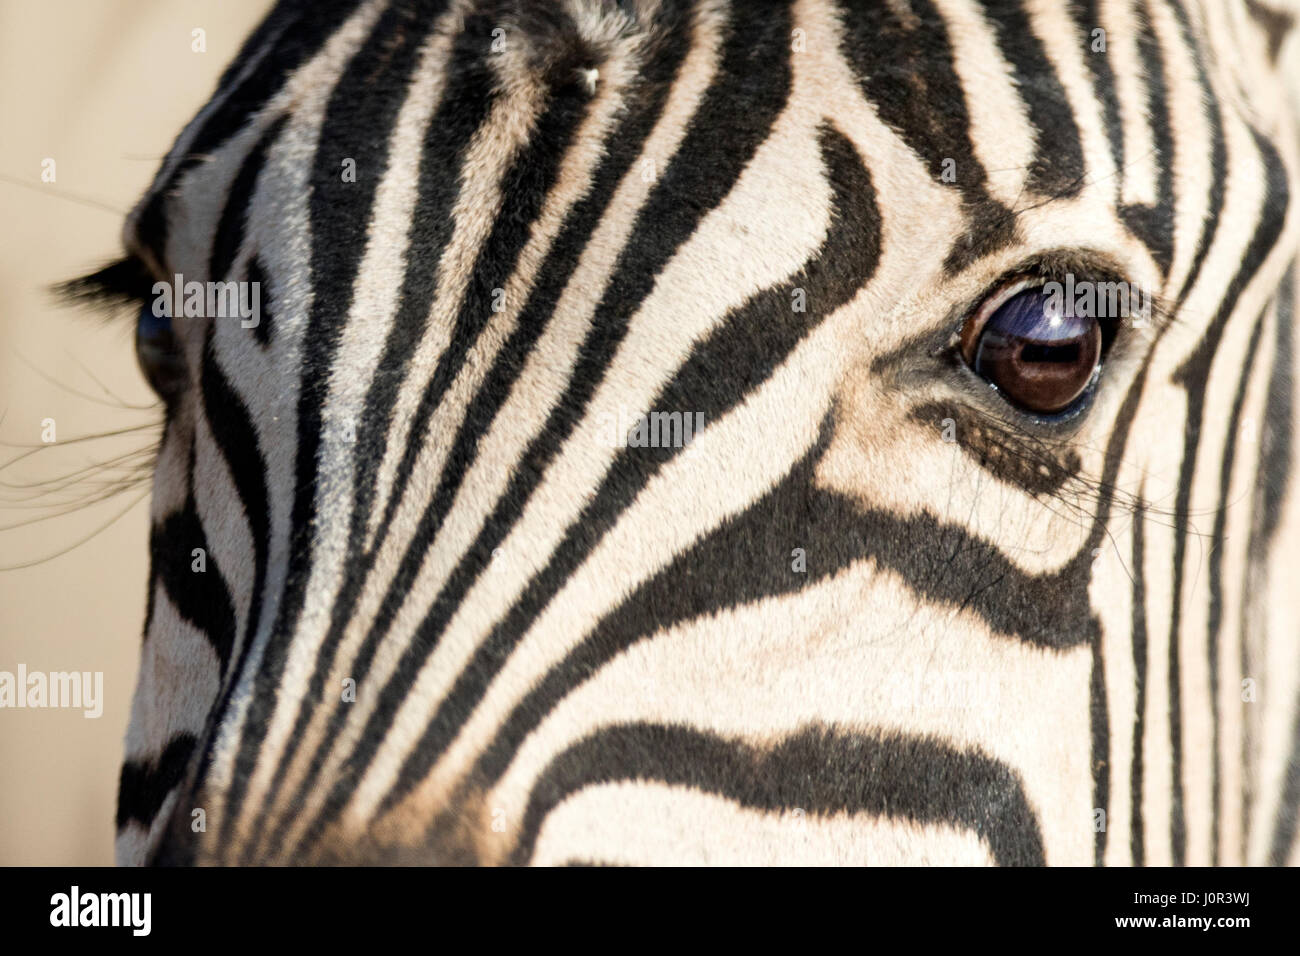 Close up of a zebra's eye. Stock Photo